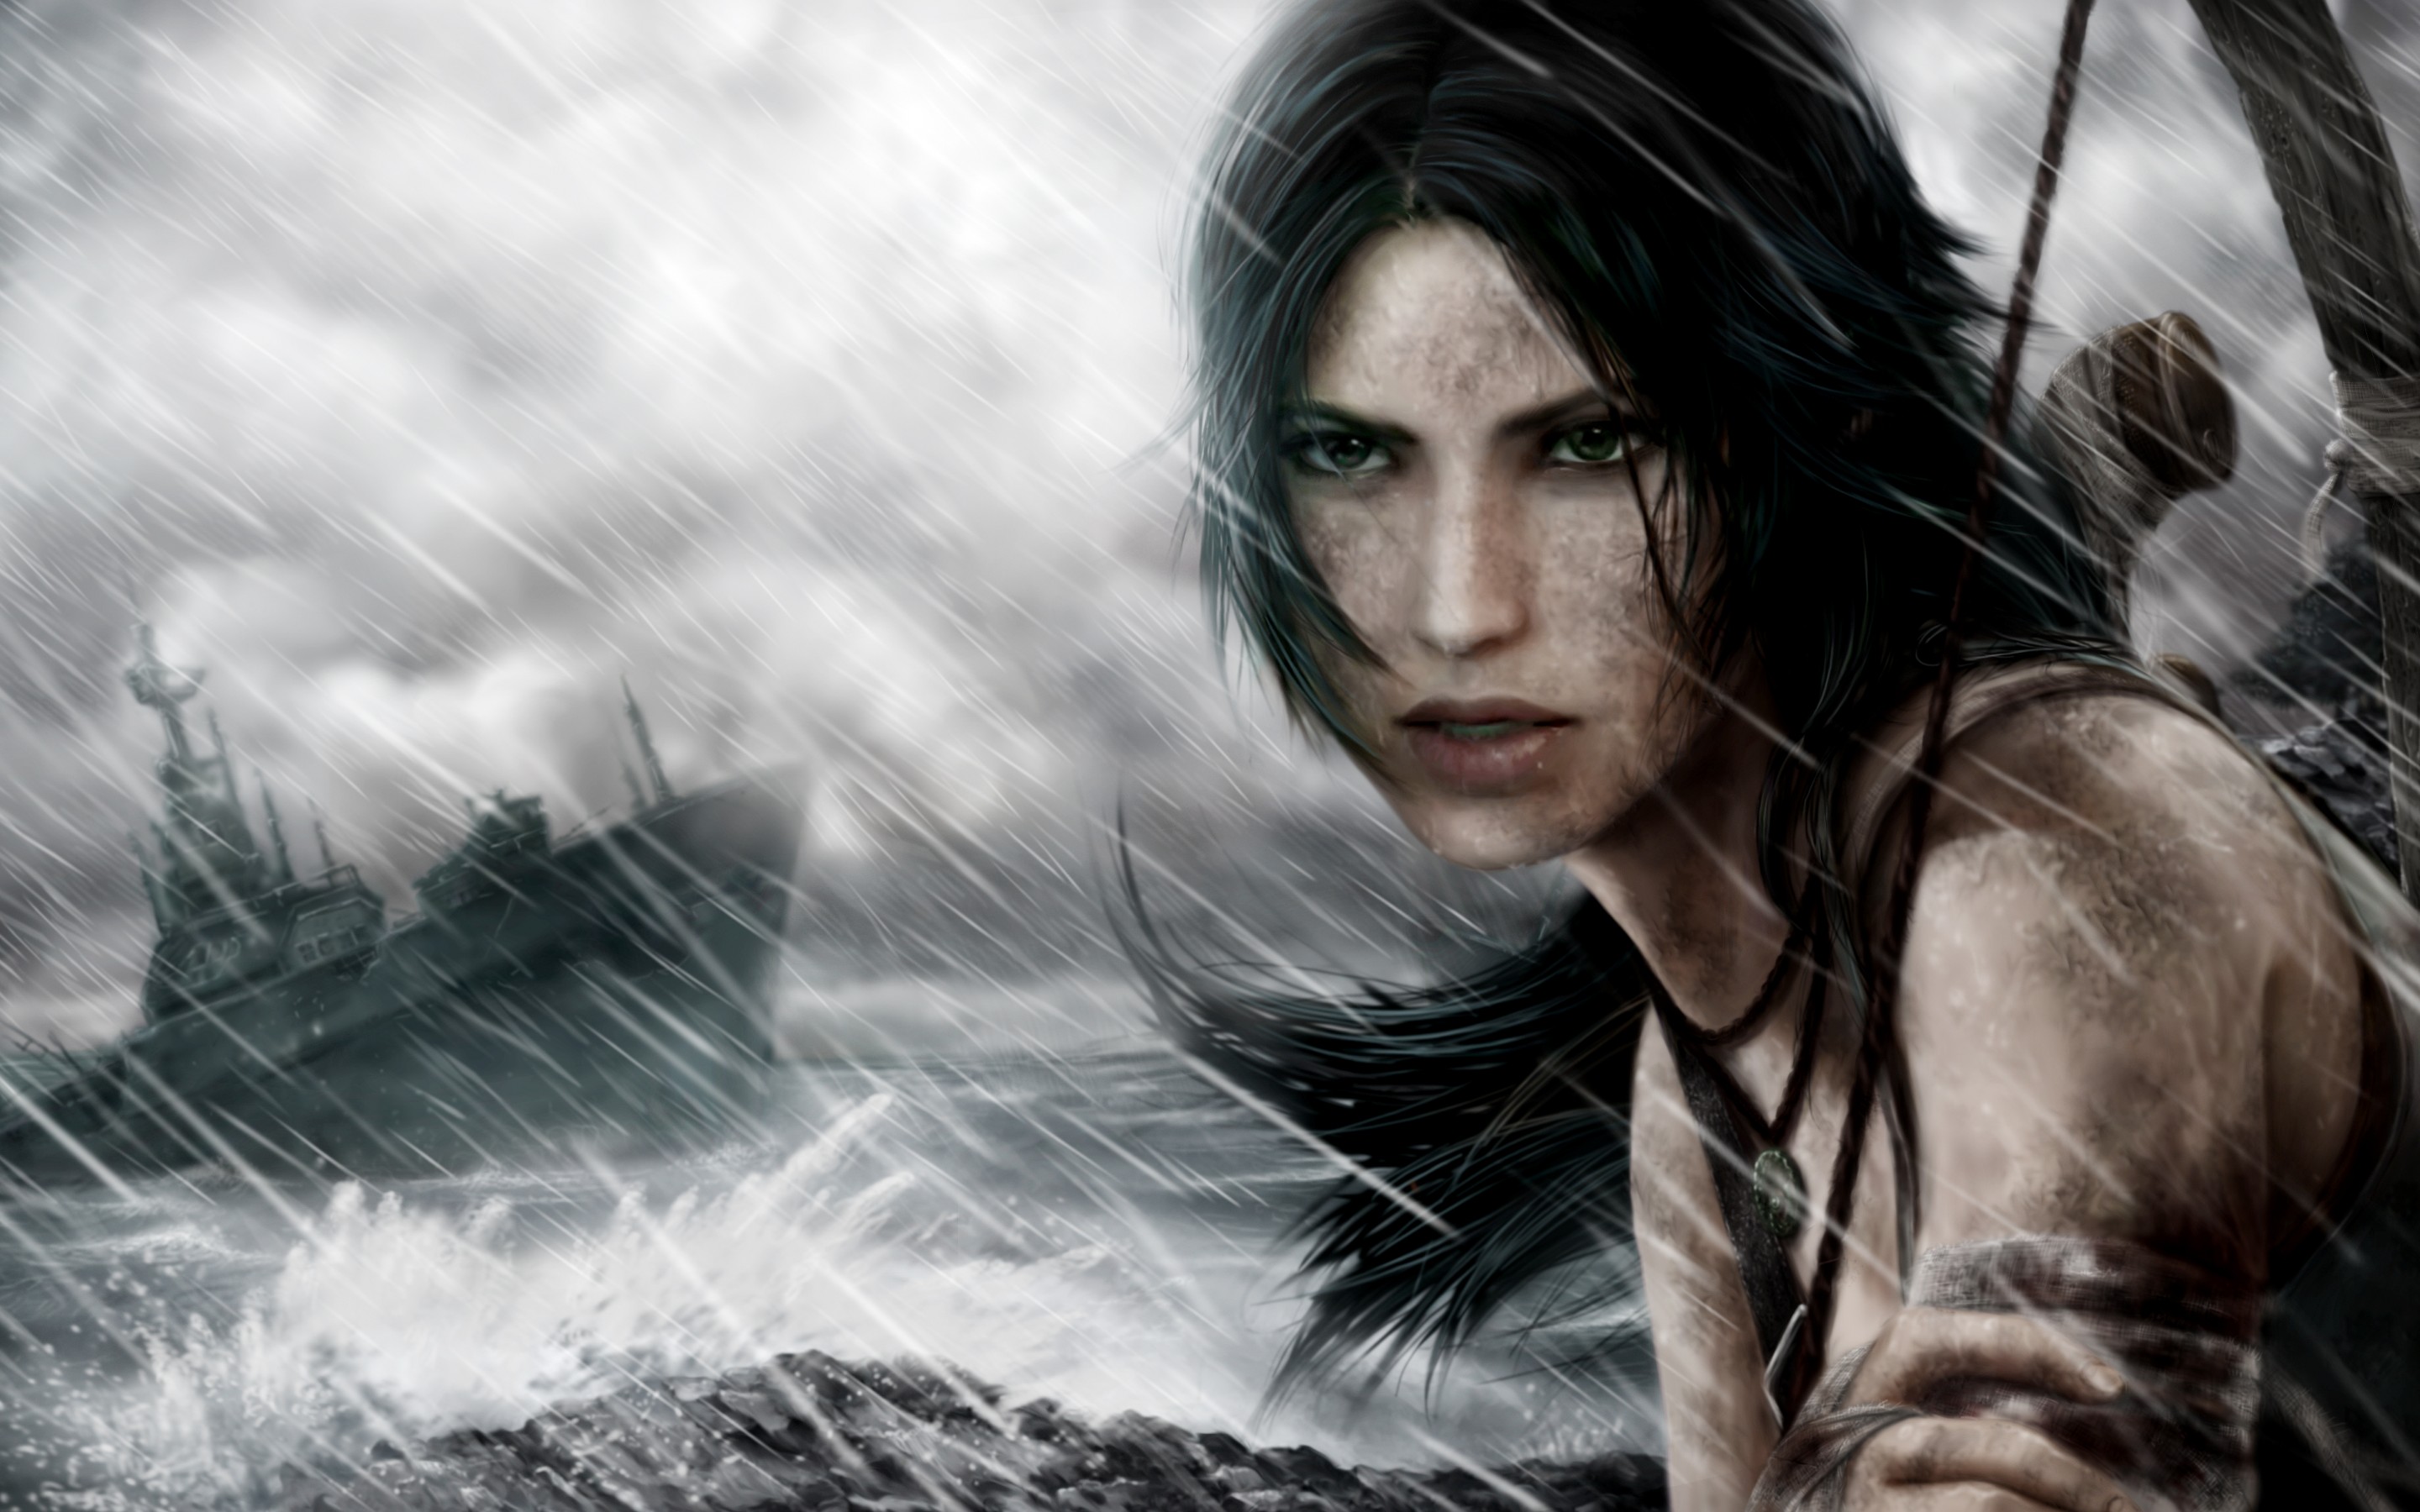 Lara Croft Tomb Raider Lara Croft the game girl gun bow face eyes hair